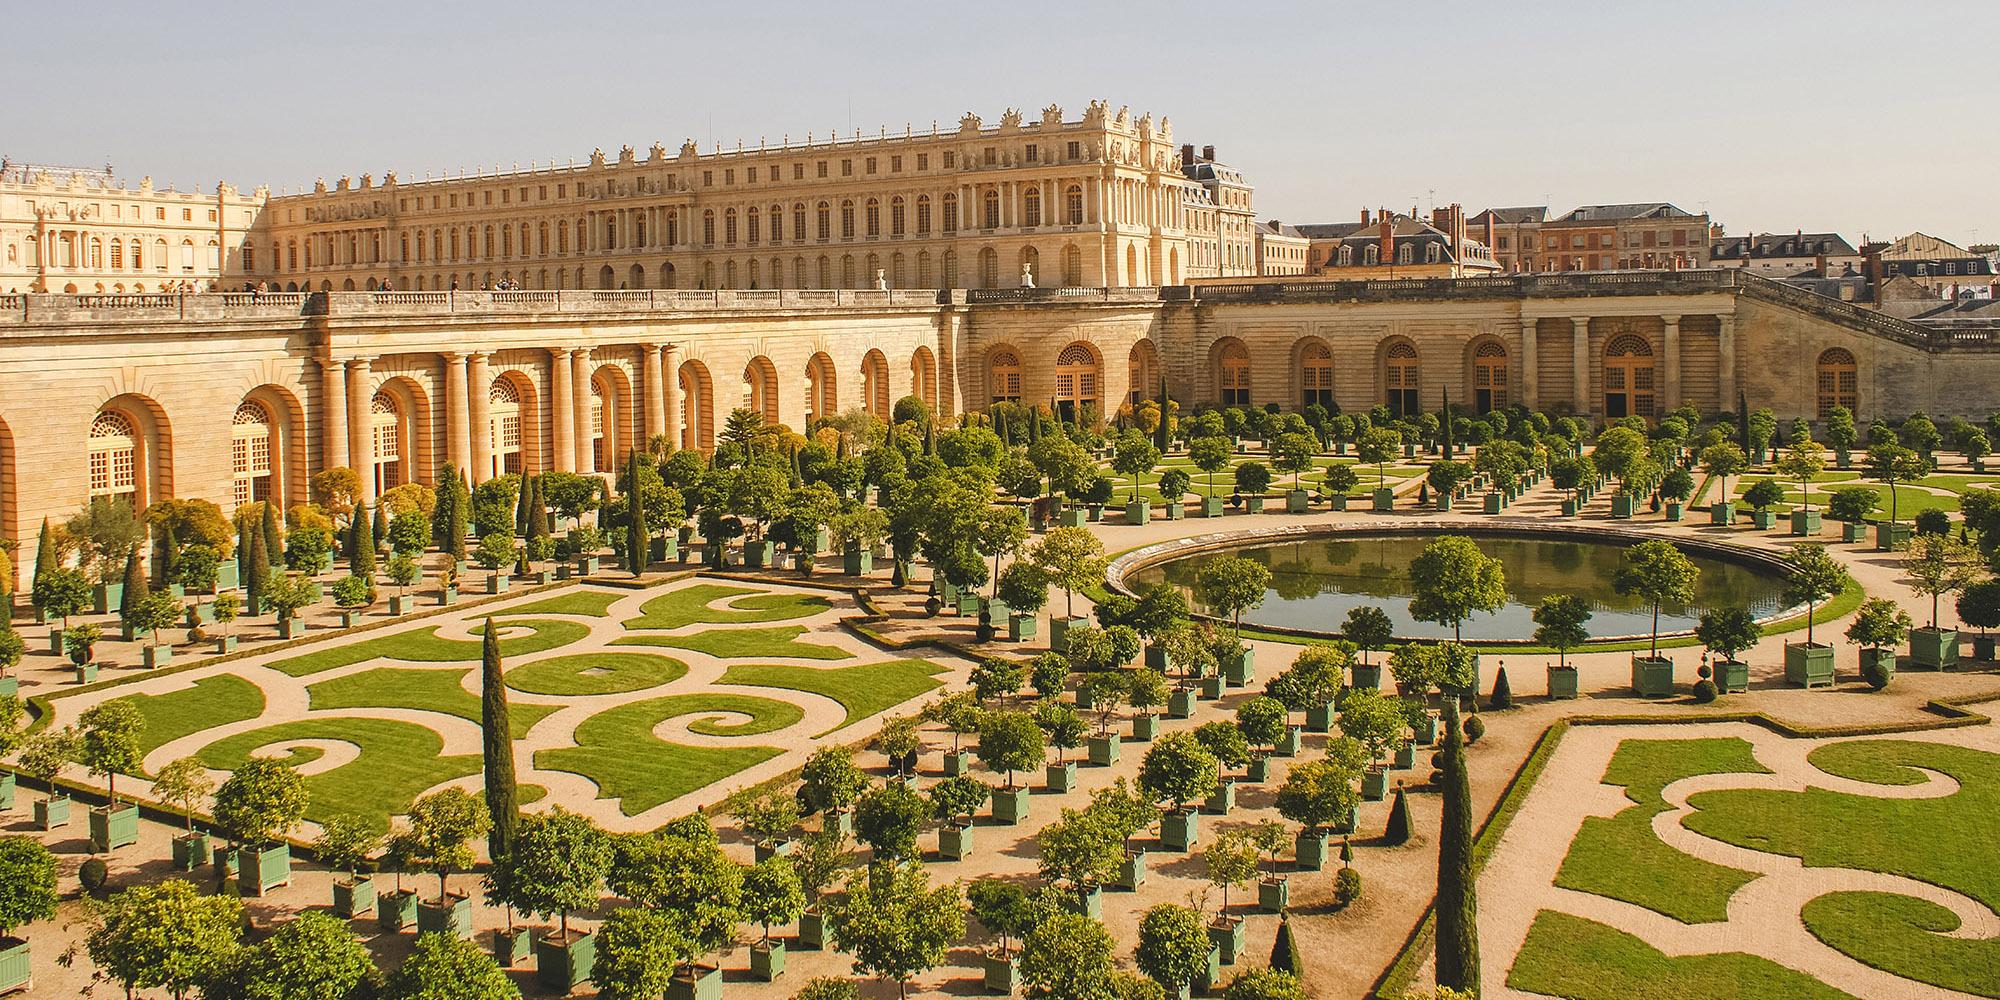 The Royal Palace in Versailles. – © Bartlomiej Rybacki